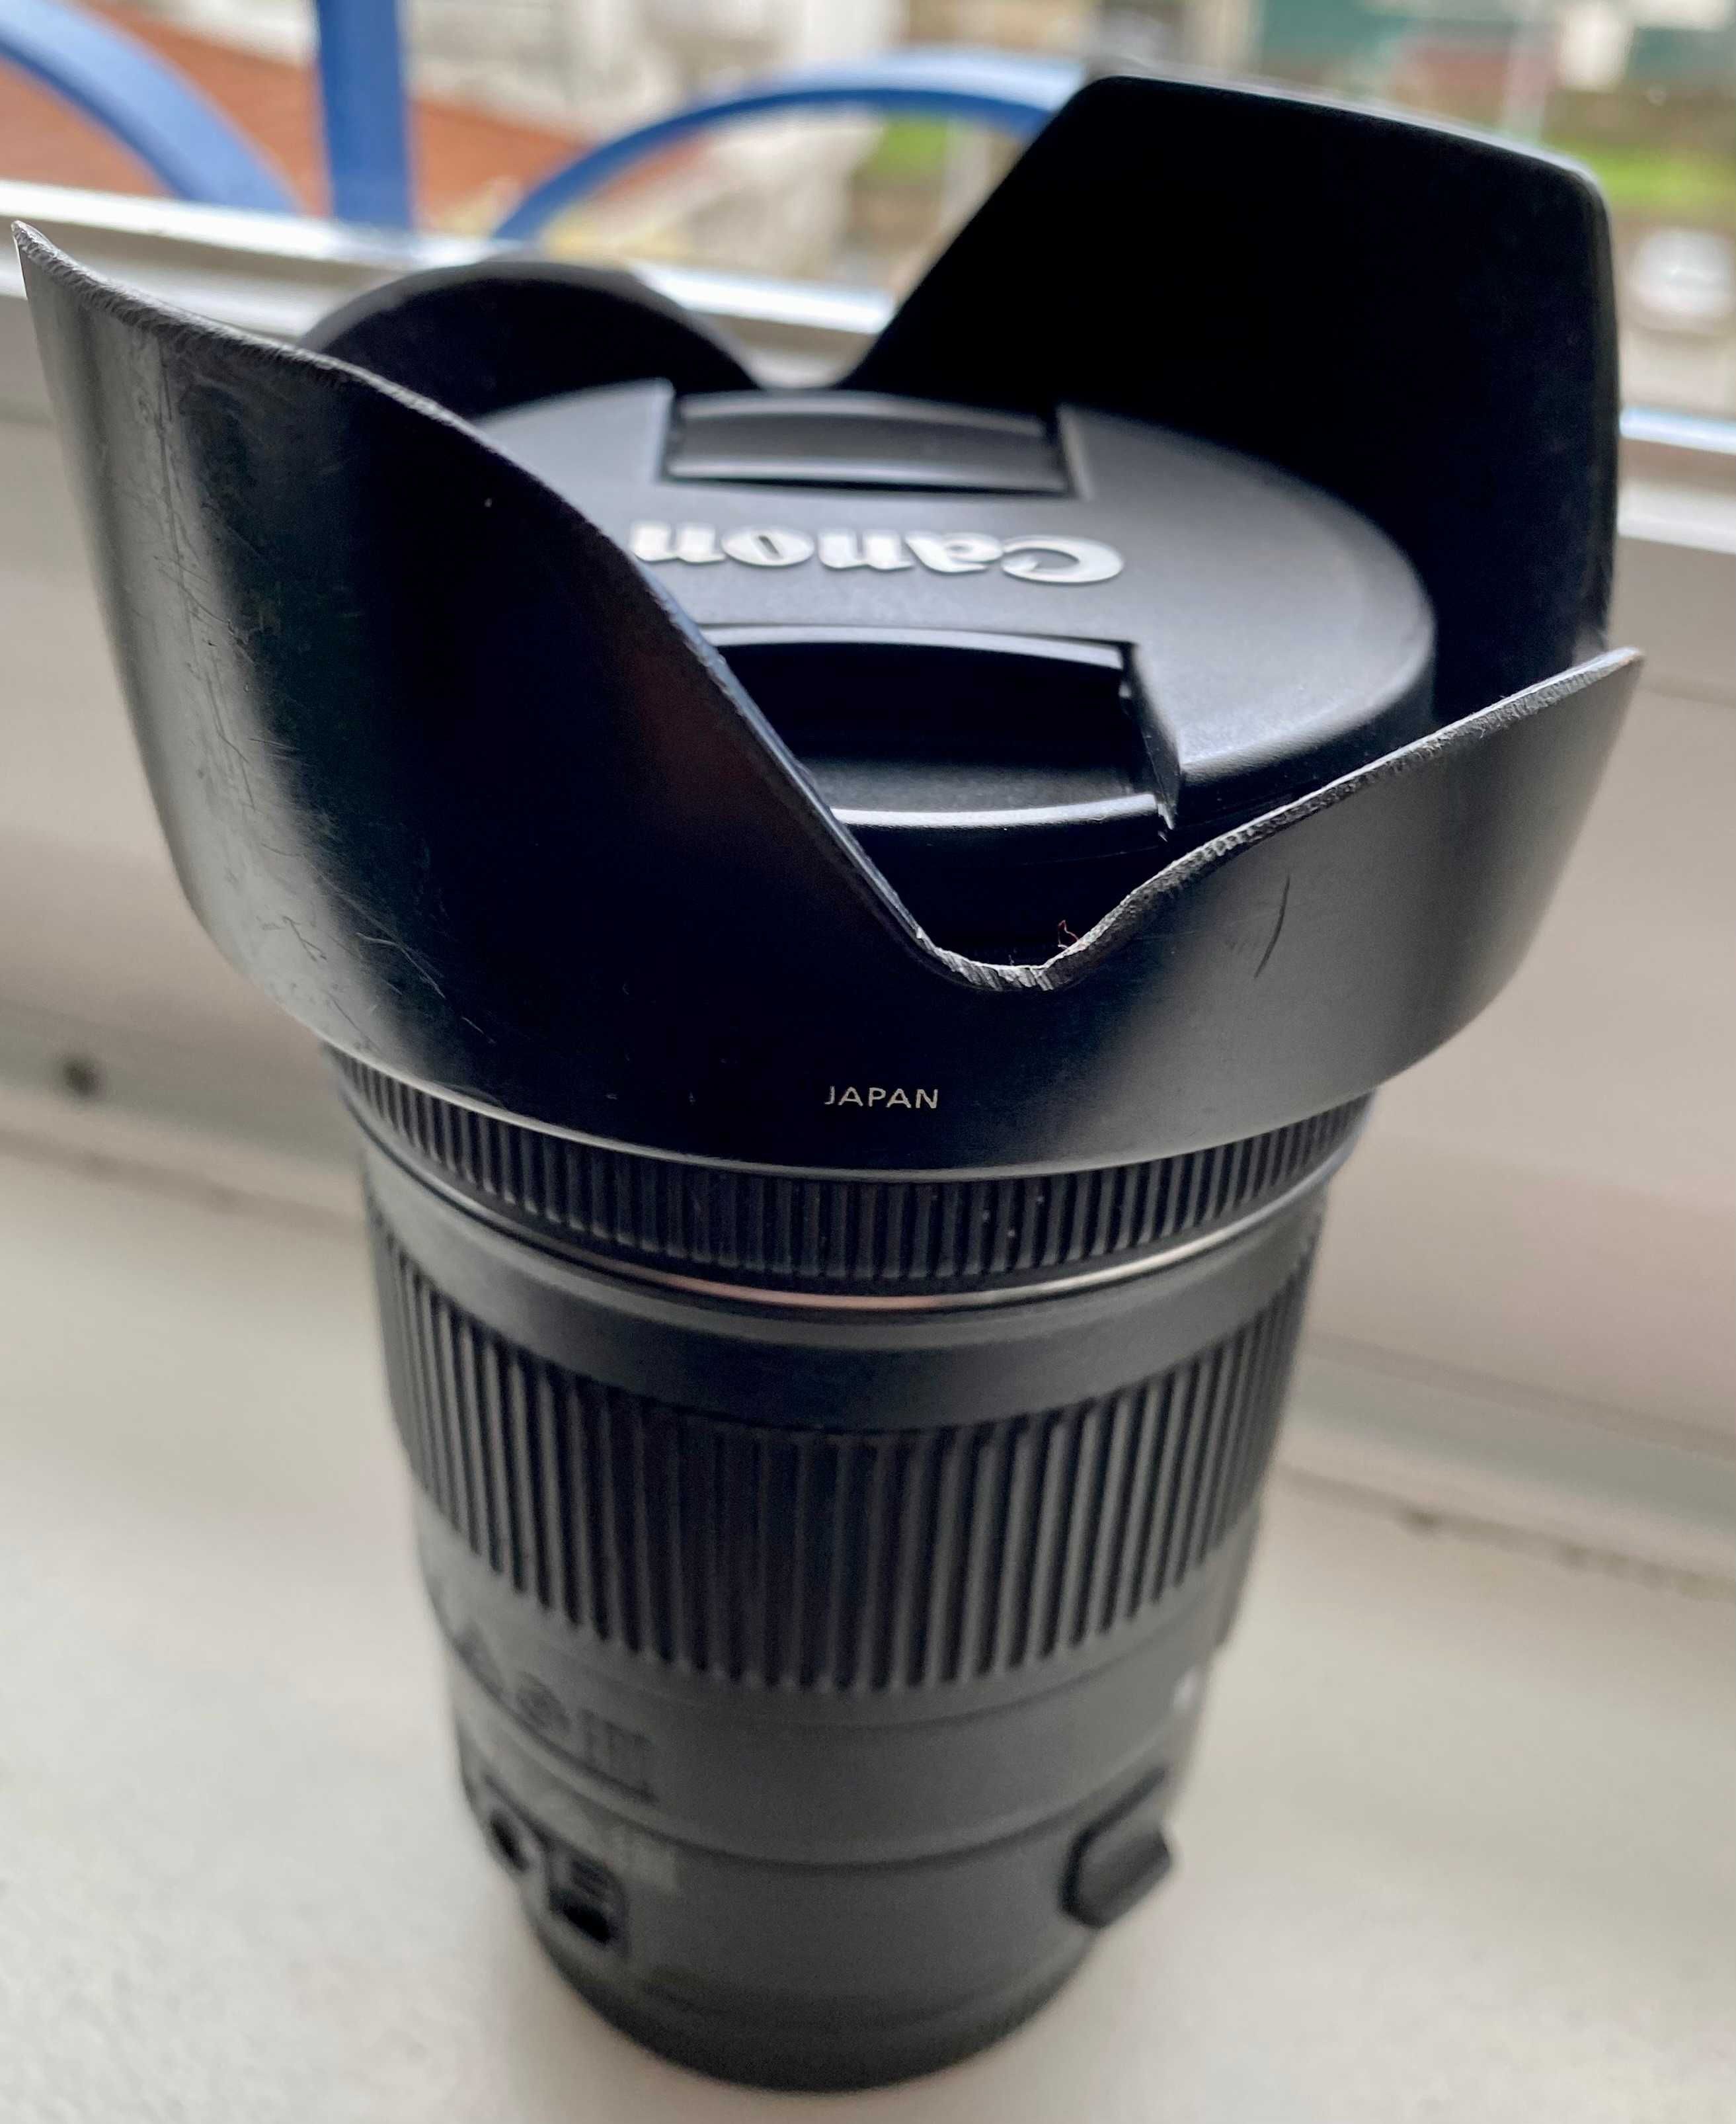 Canon EOS M5 Kit nova, mais barata